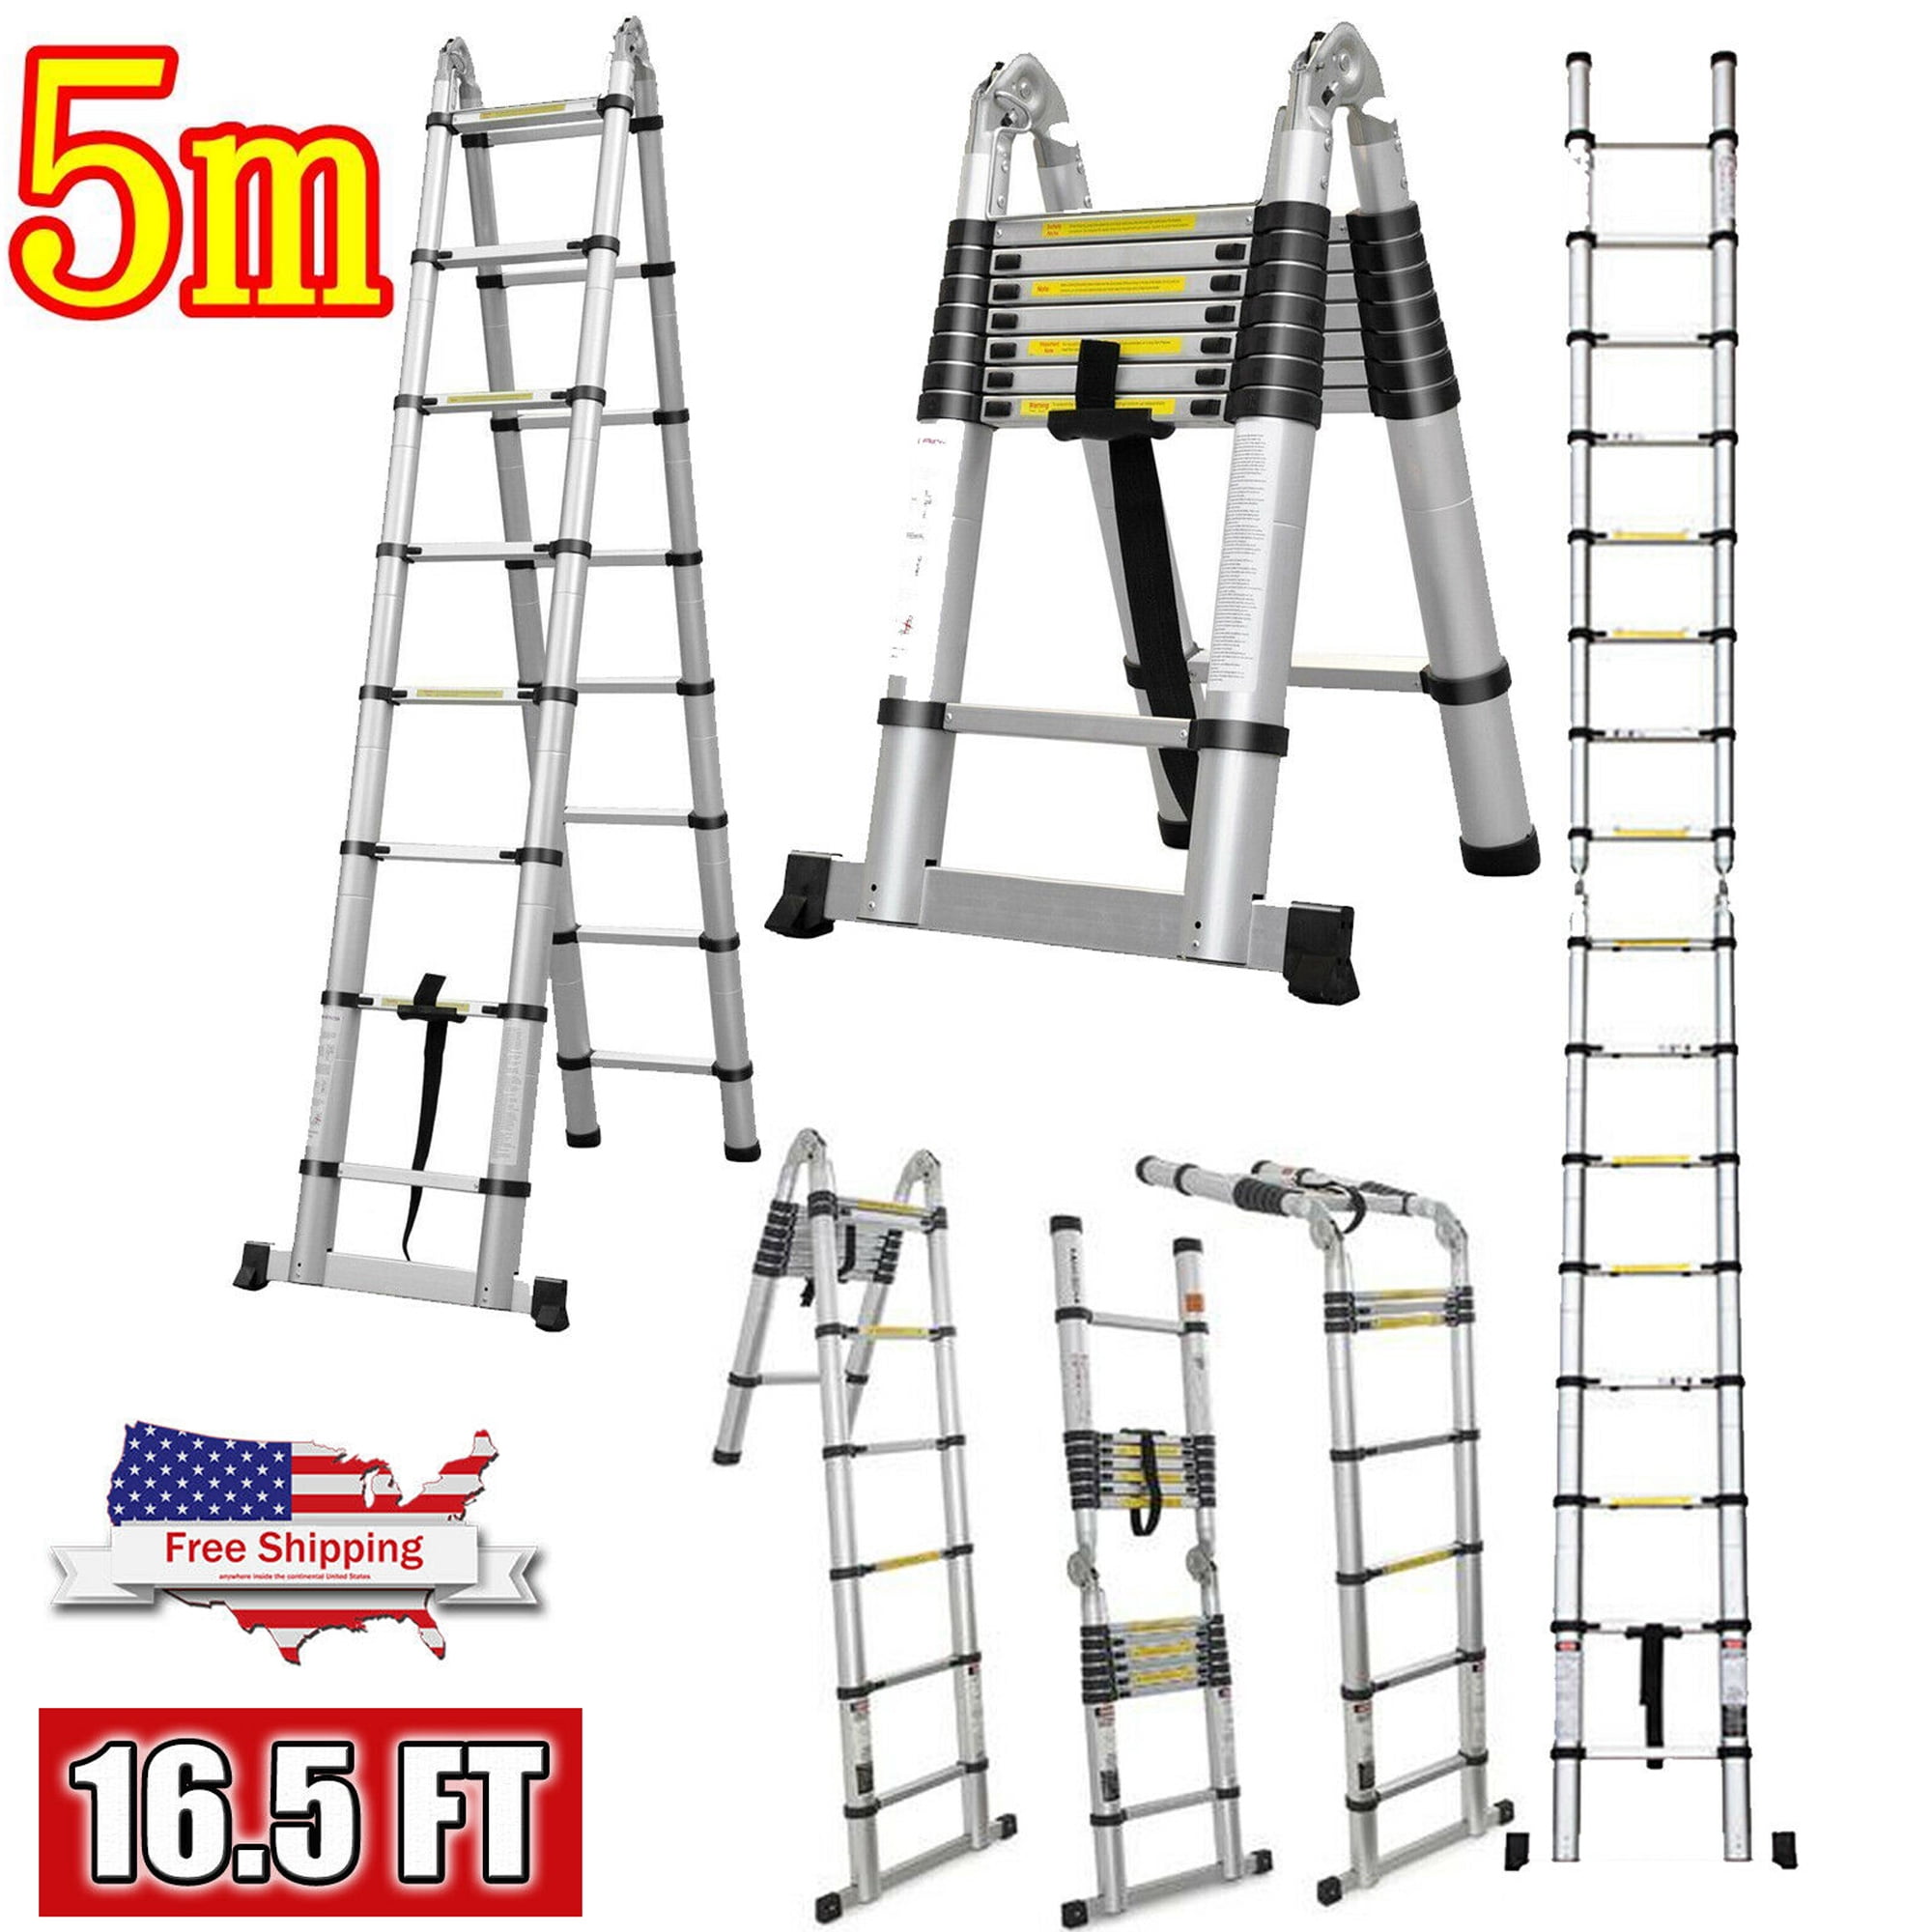 6.5FT Aluminum Multi-Purpose Telescopic Ladder Extension Loft Steps Tall EN131 